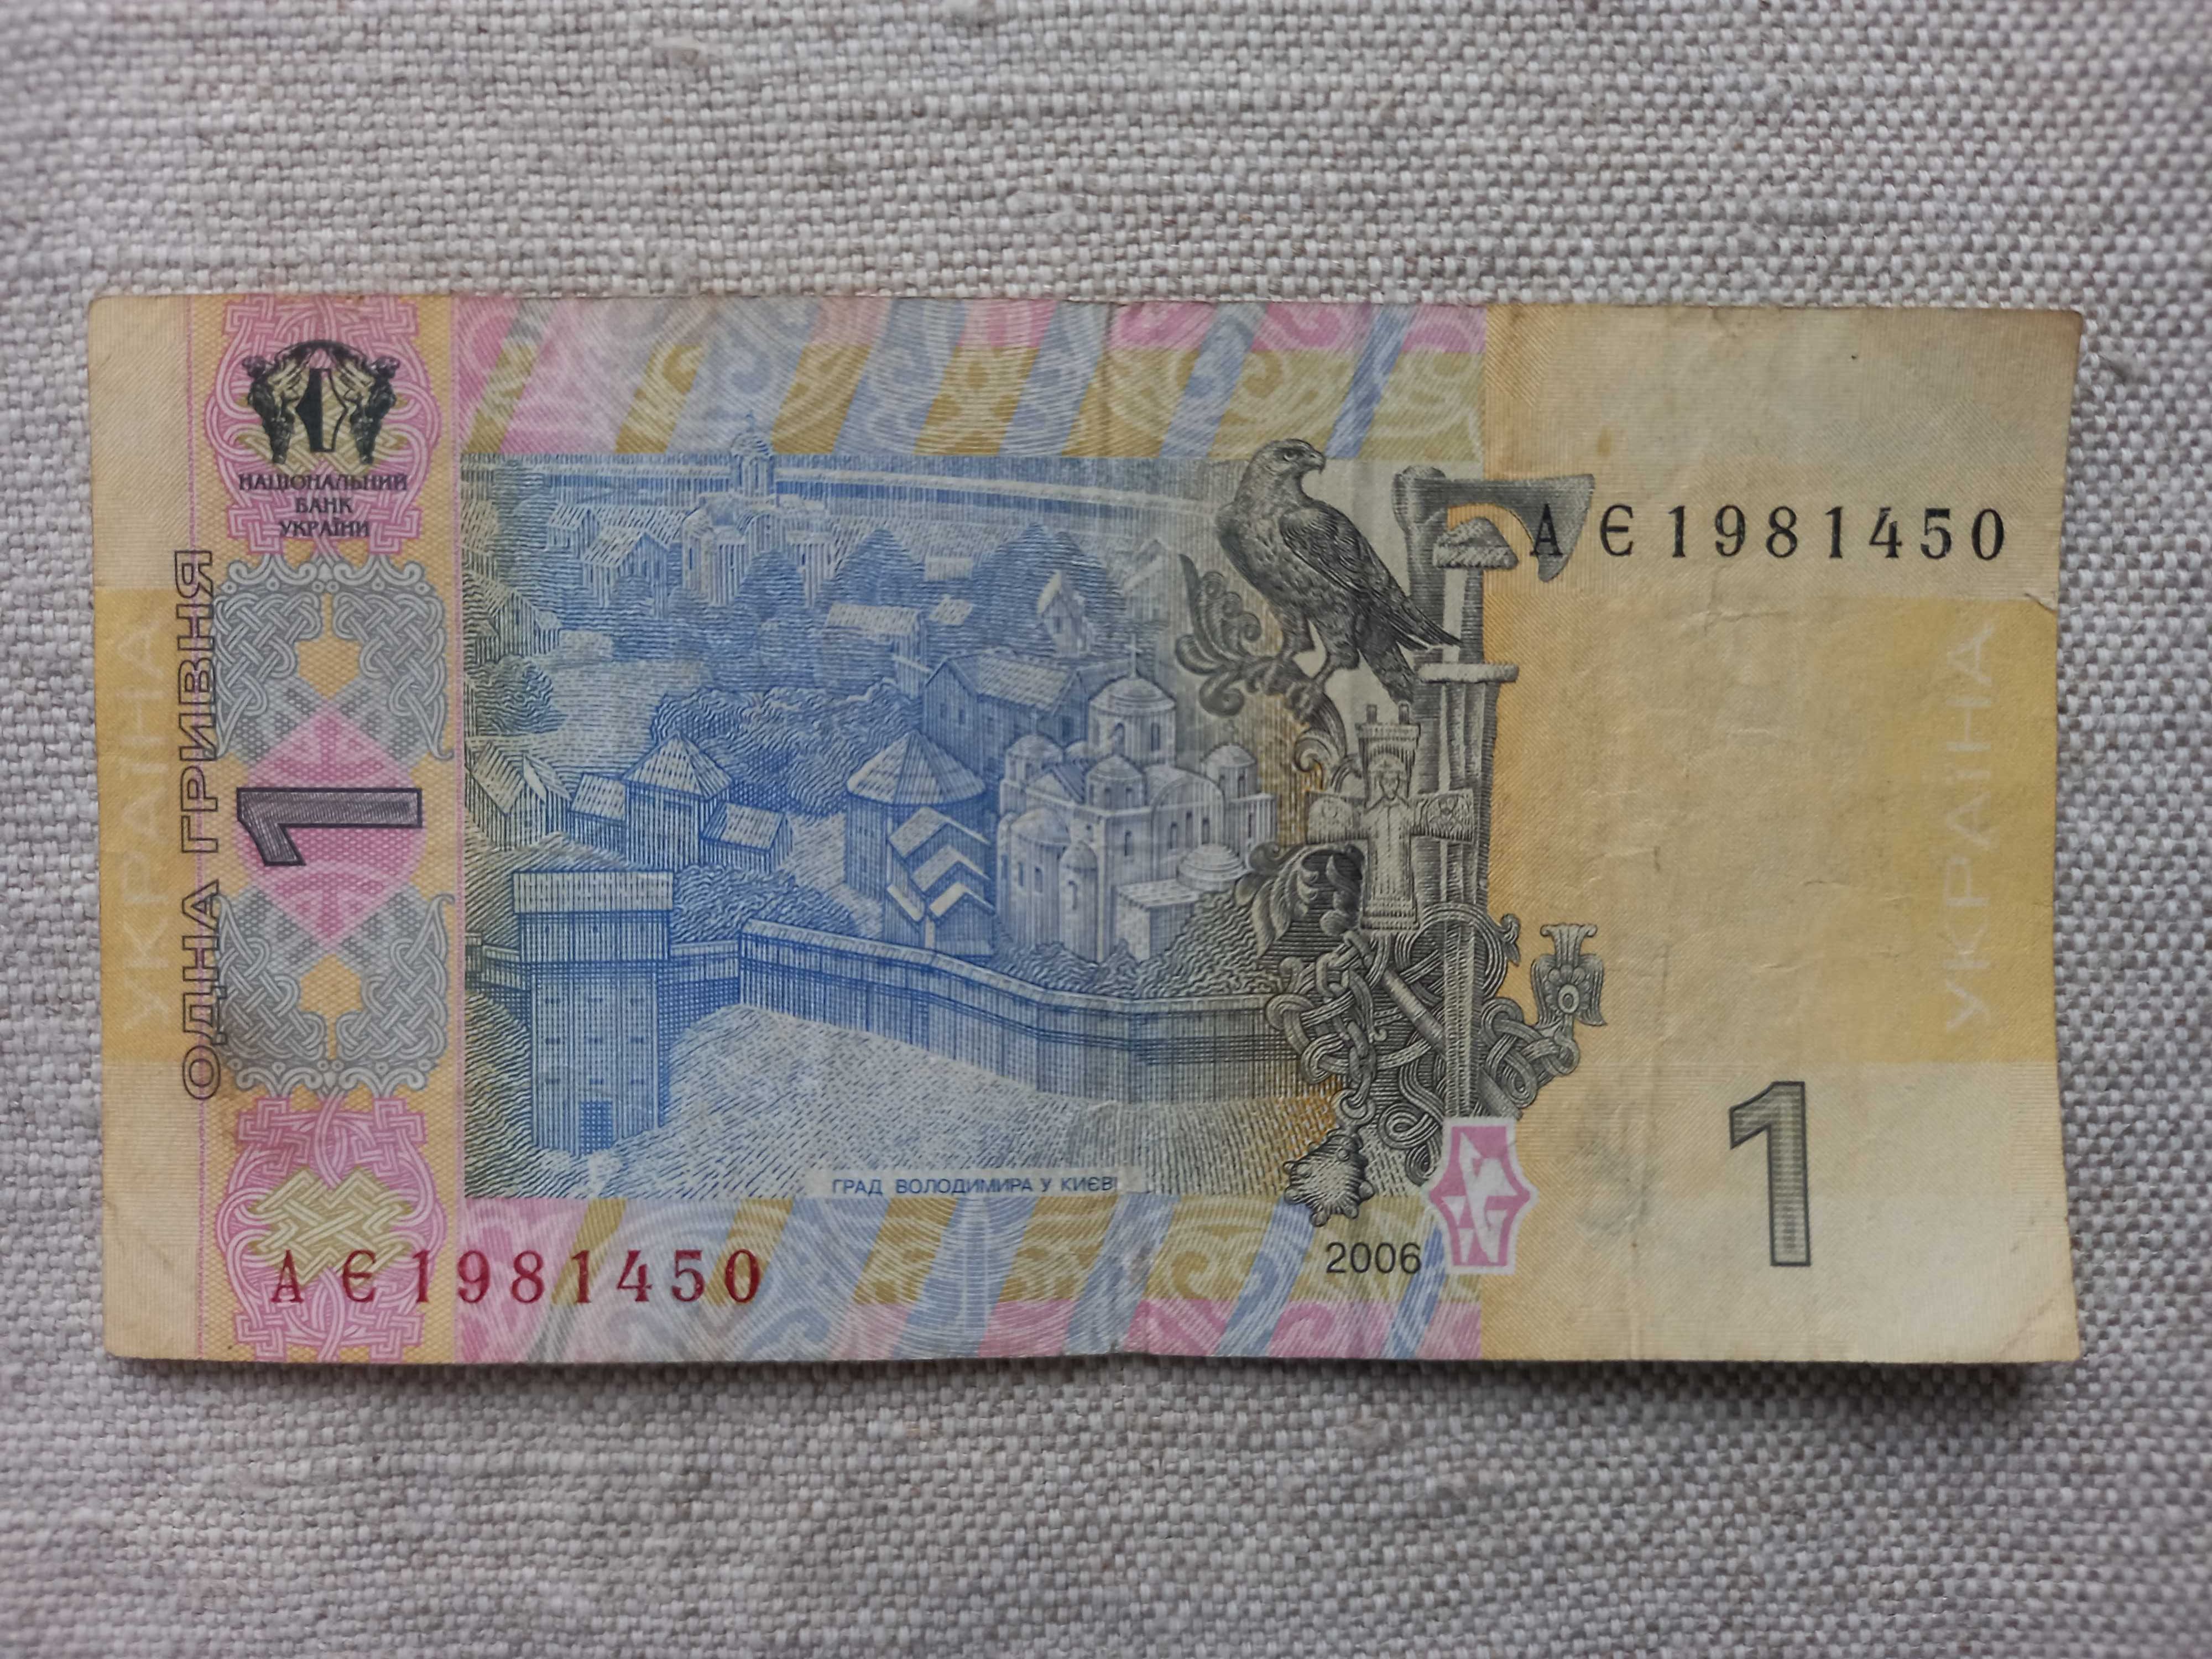 UKRAINA banknot 1 Hrywna z 2006 roku